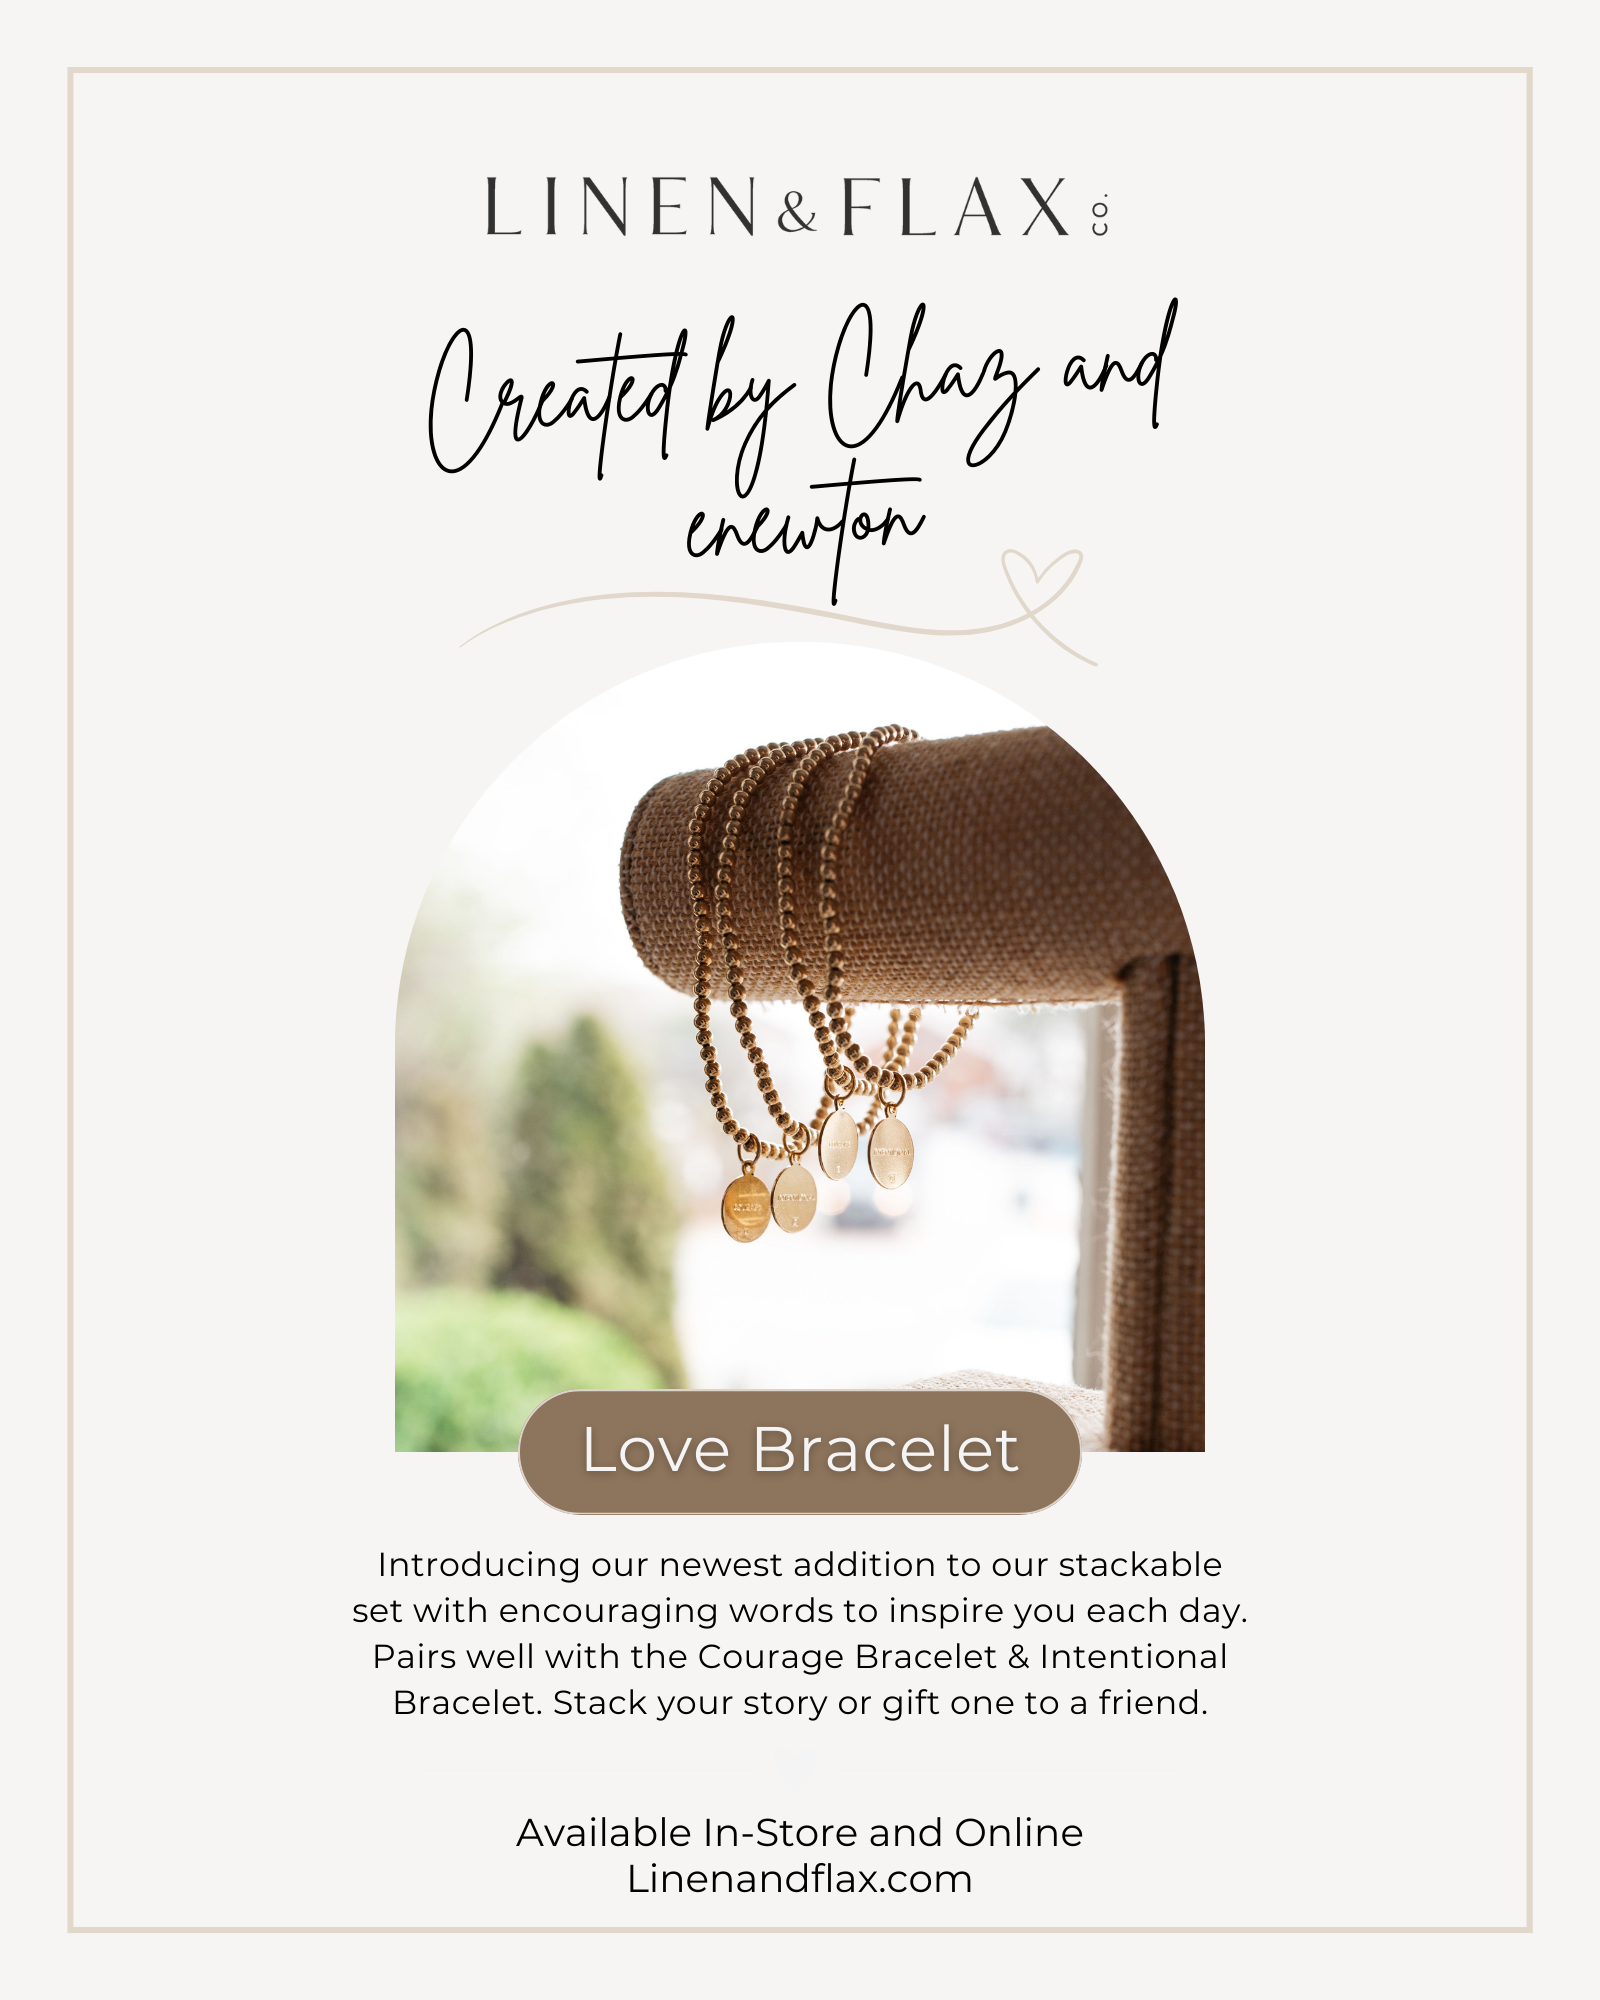 Love Bracelet-Extends